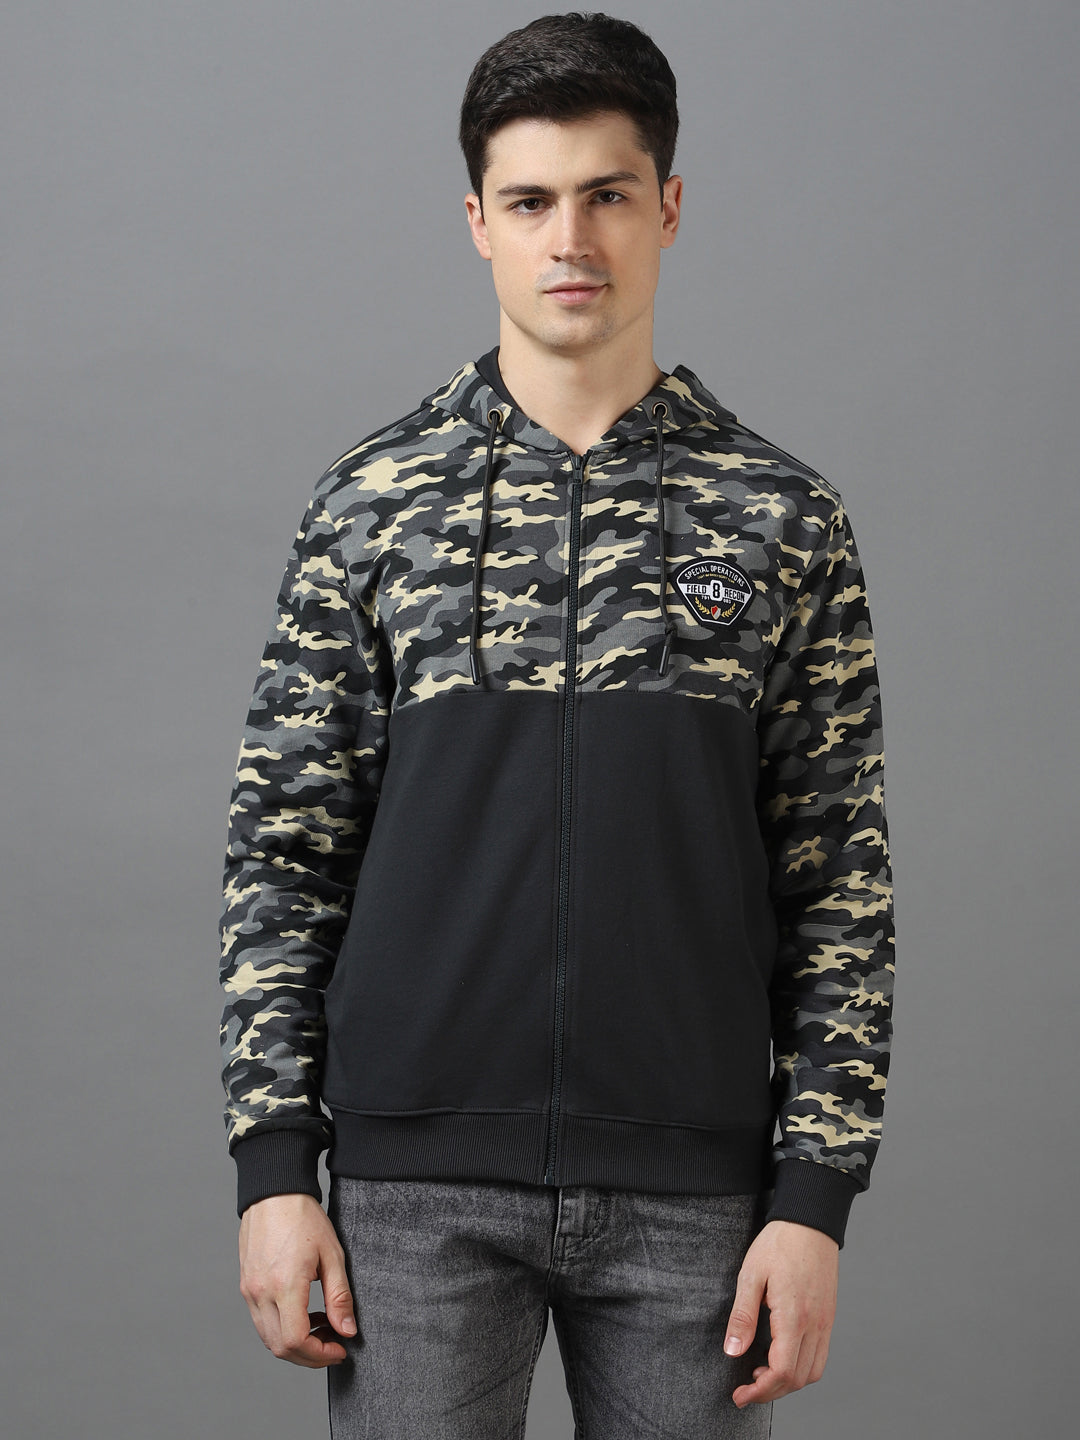 Men's Grey Cotton Camouflage Printed Hooded Neck Sweatshirt